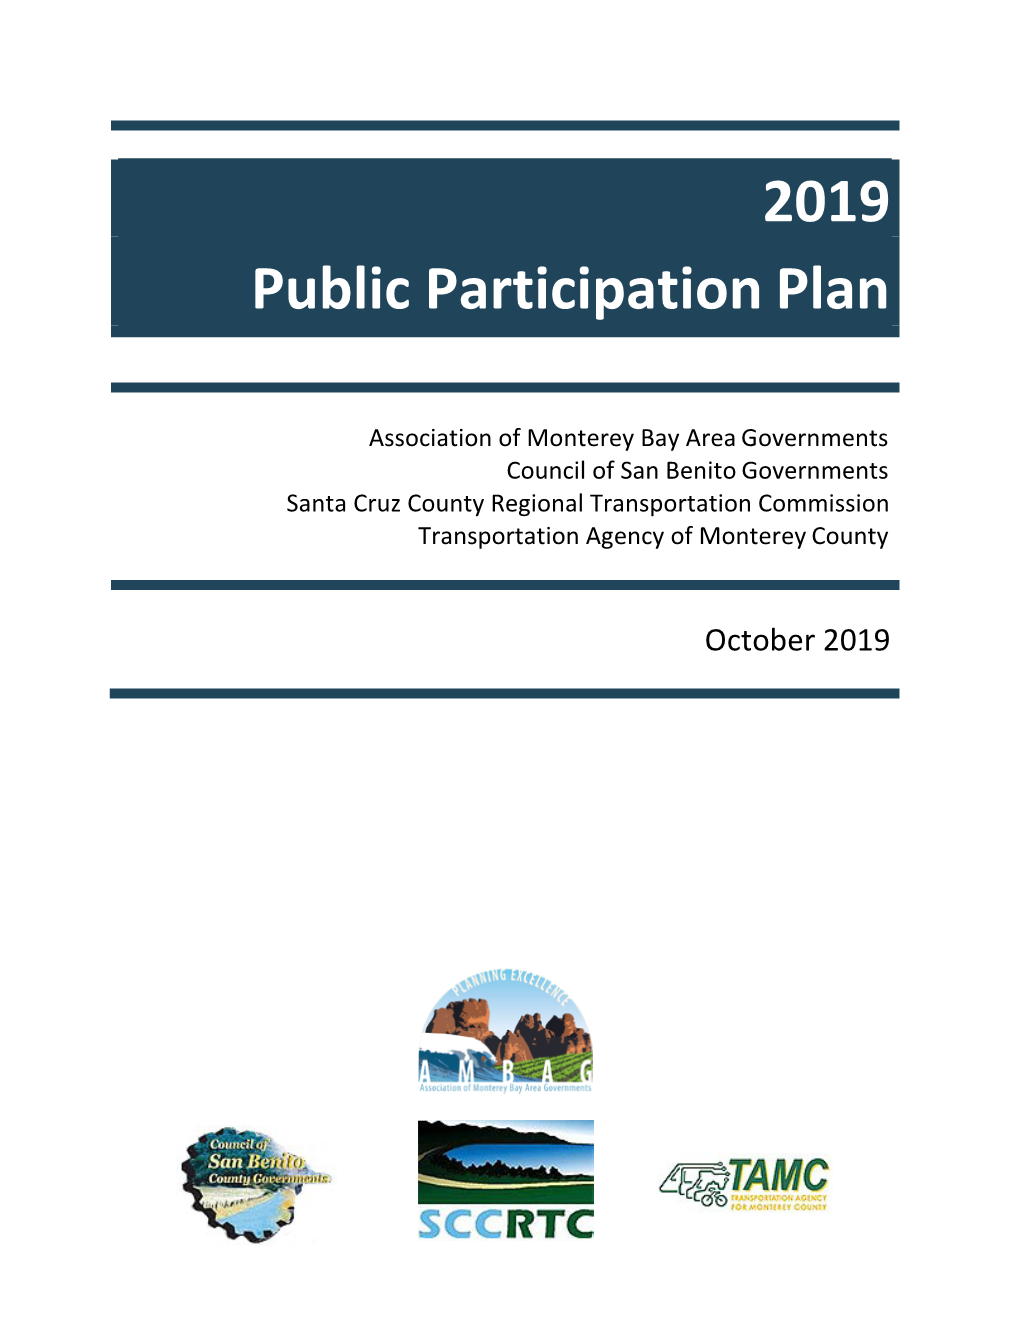 Public Participation Plan and the 2019